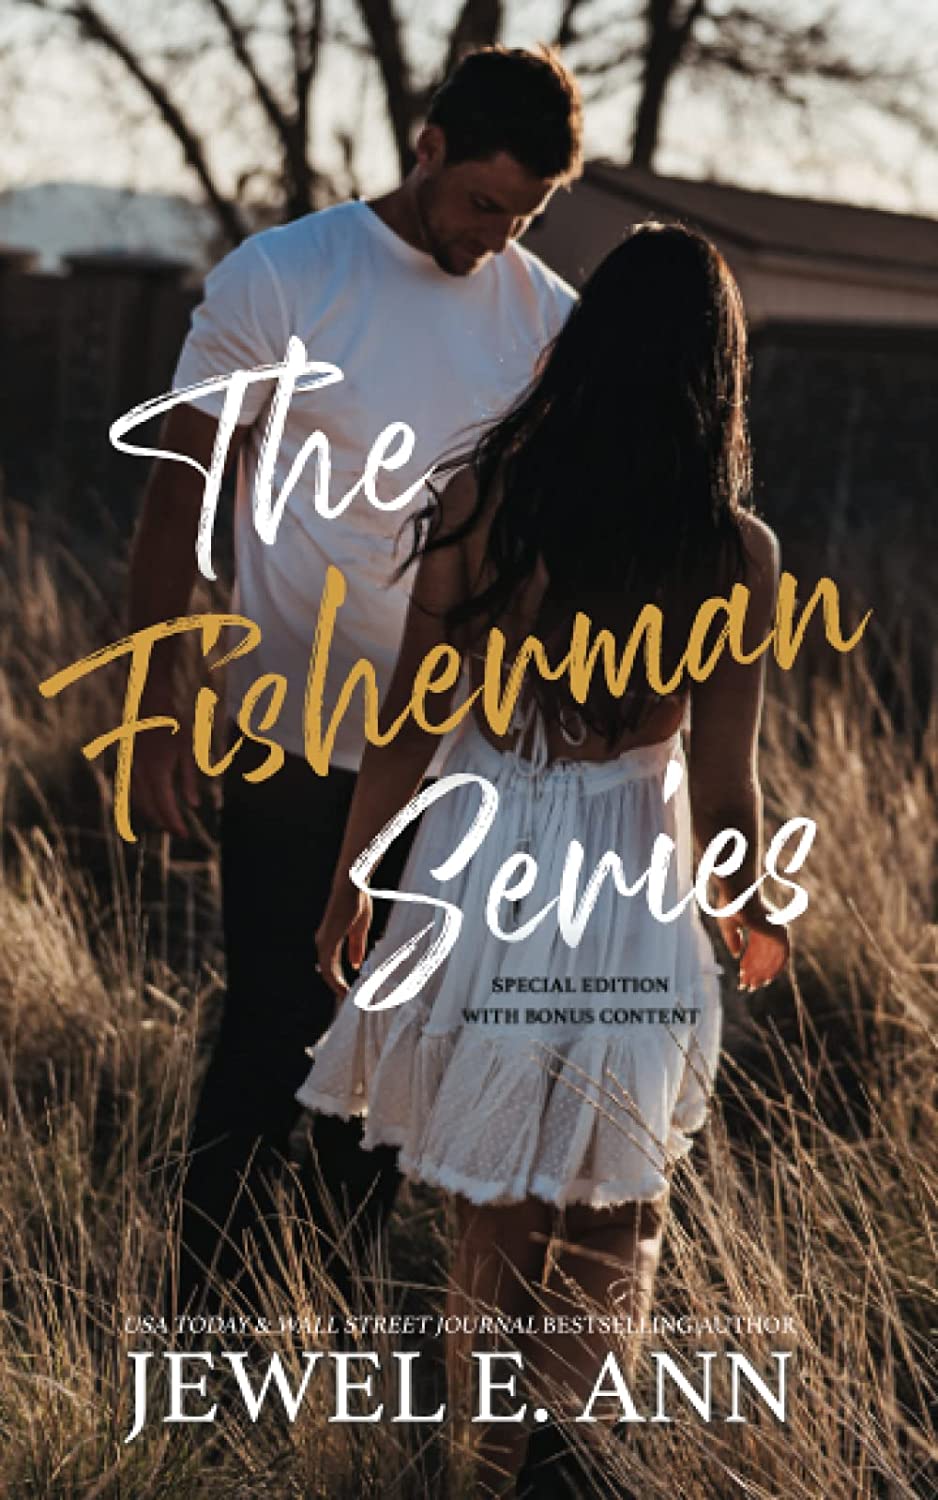 The Fisherman Series by Jewel E Ann